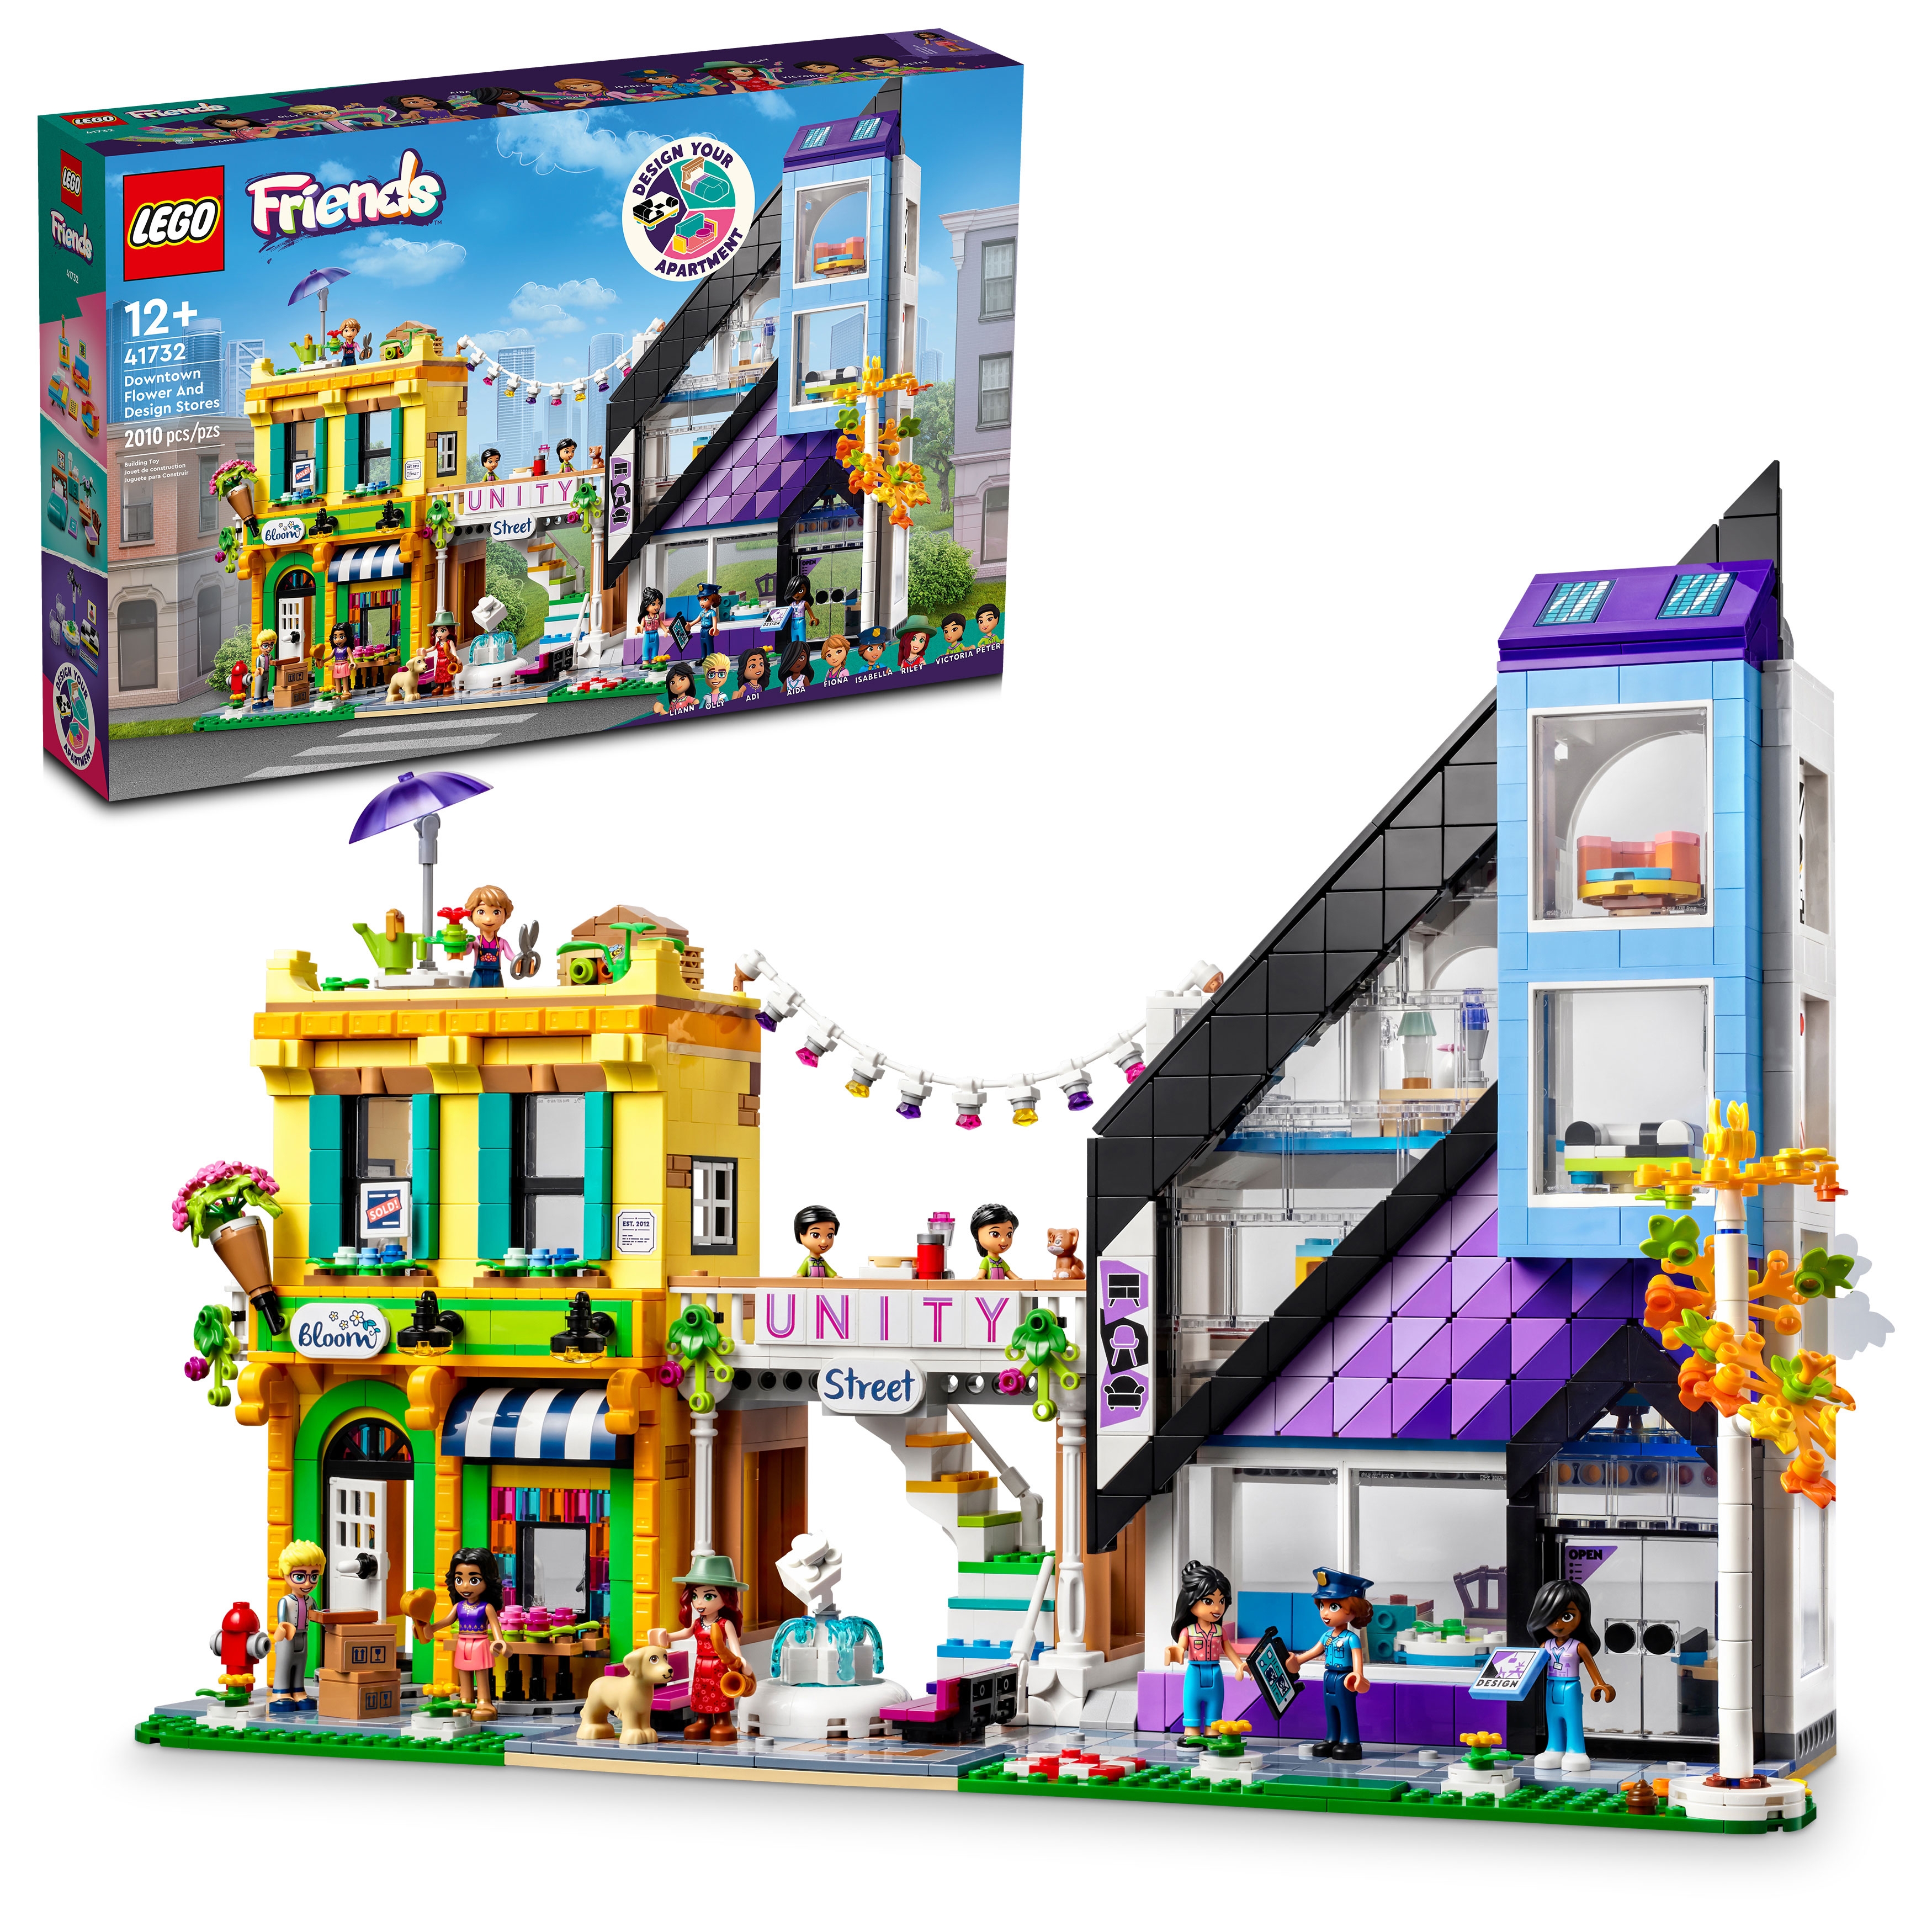 Flower Design Stores 41732 | Friends | Buy online at Official LEGO® Shop US